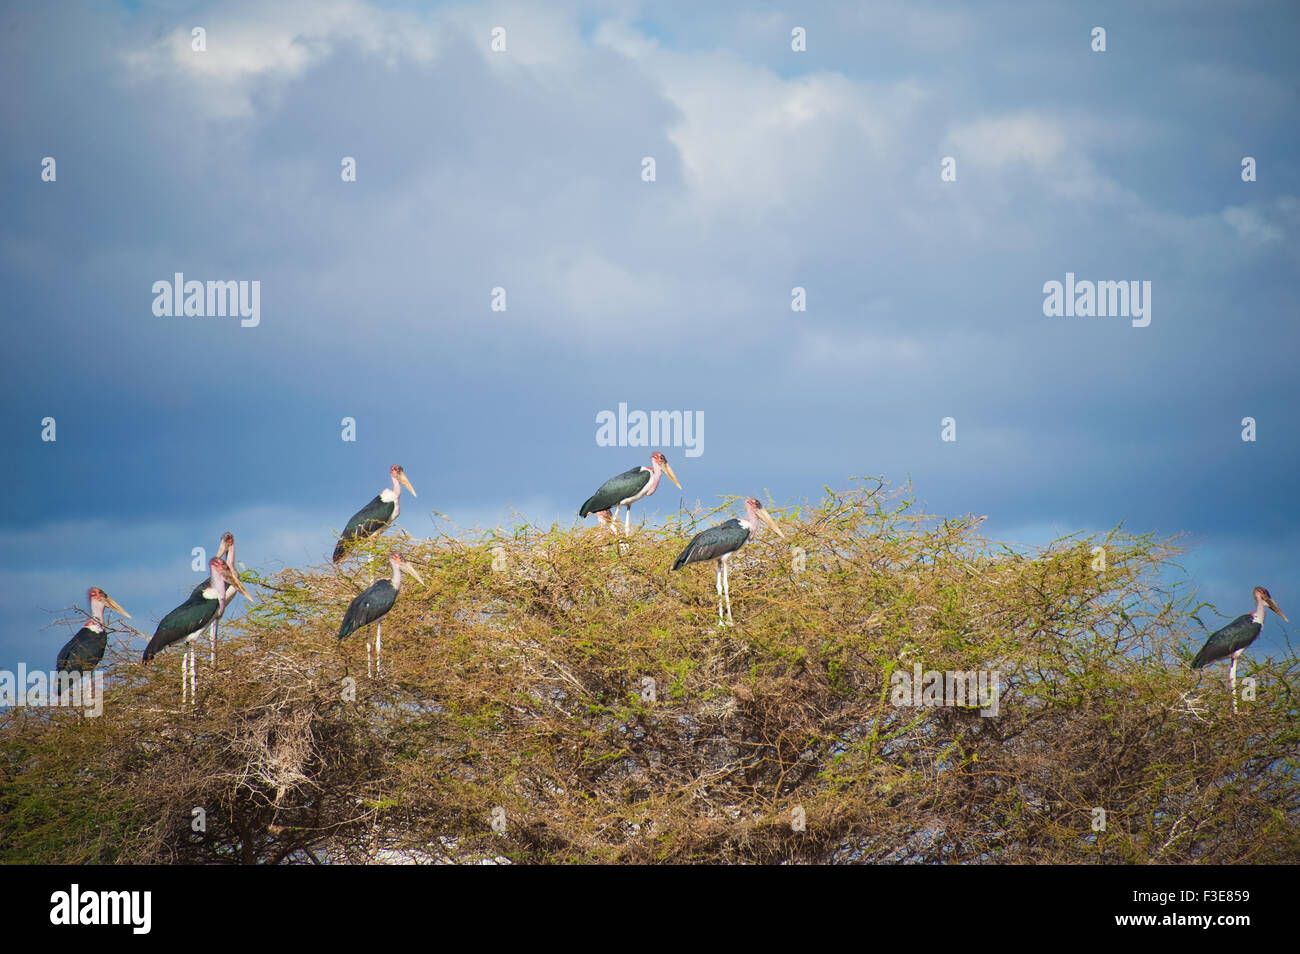 Marabou storks (Leptoptilos crumenifer) sitting on top of a tree in eastern Kenya. Stock Photo